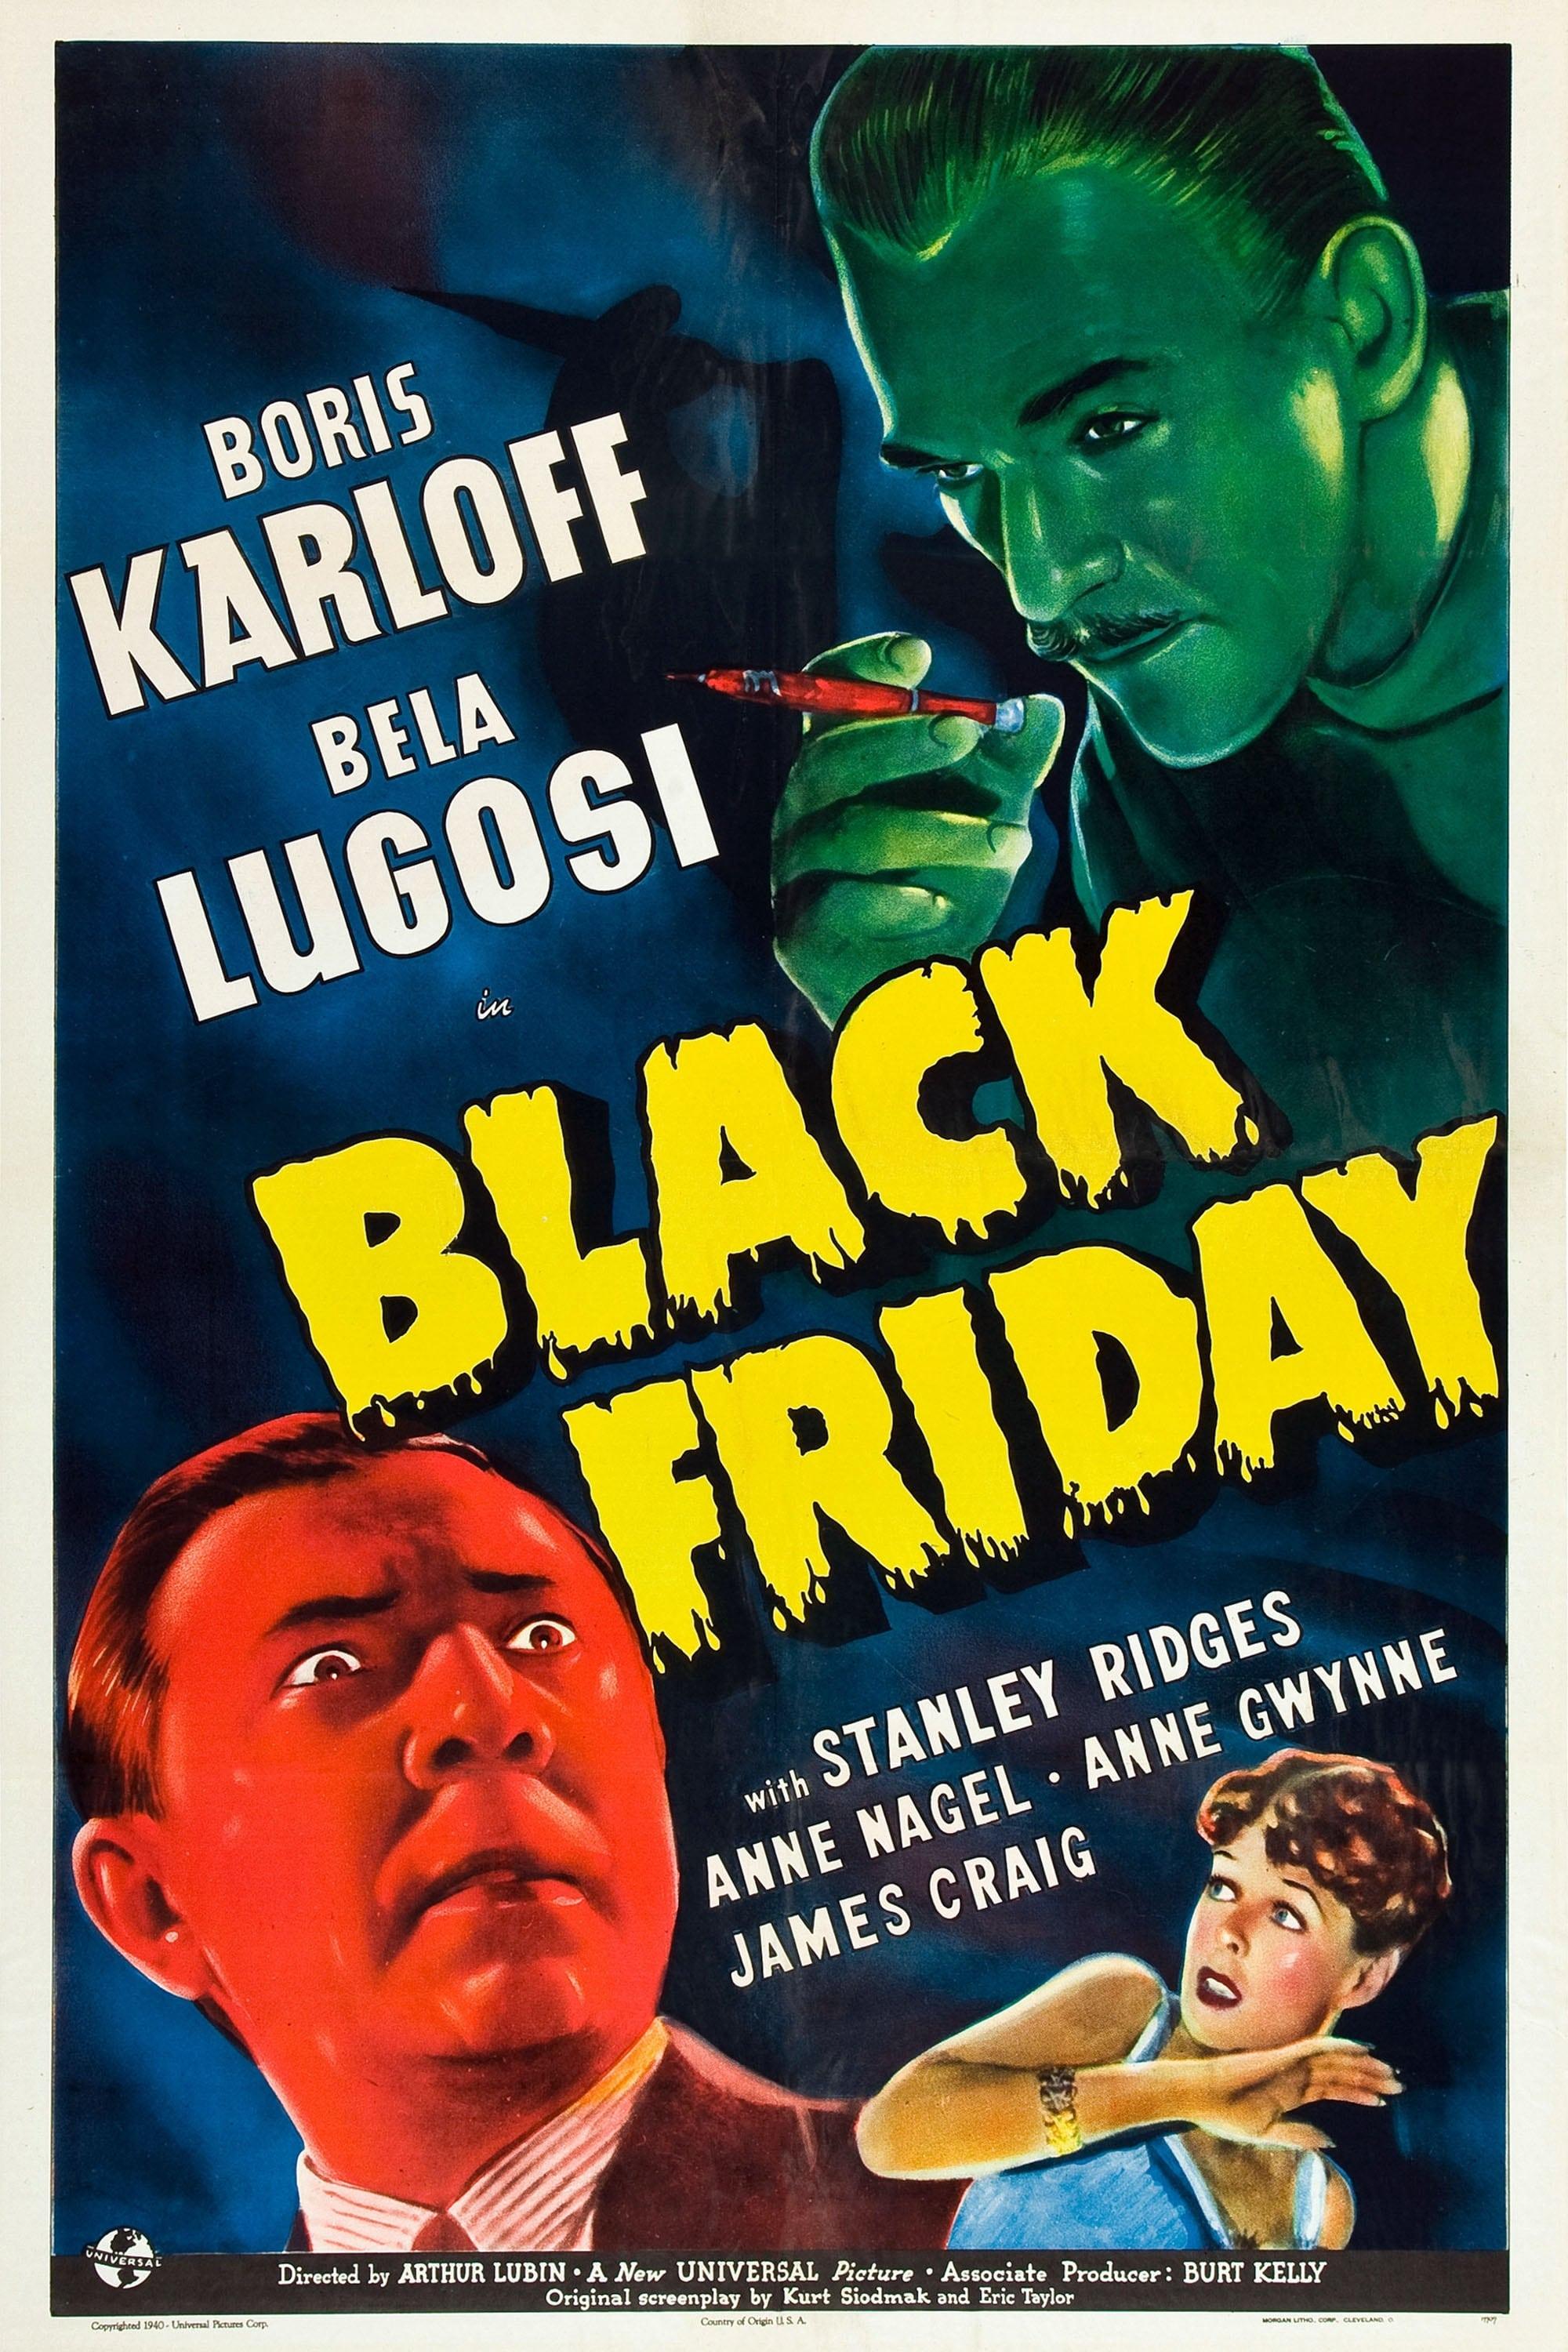 Black Friday poster